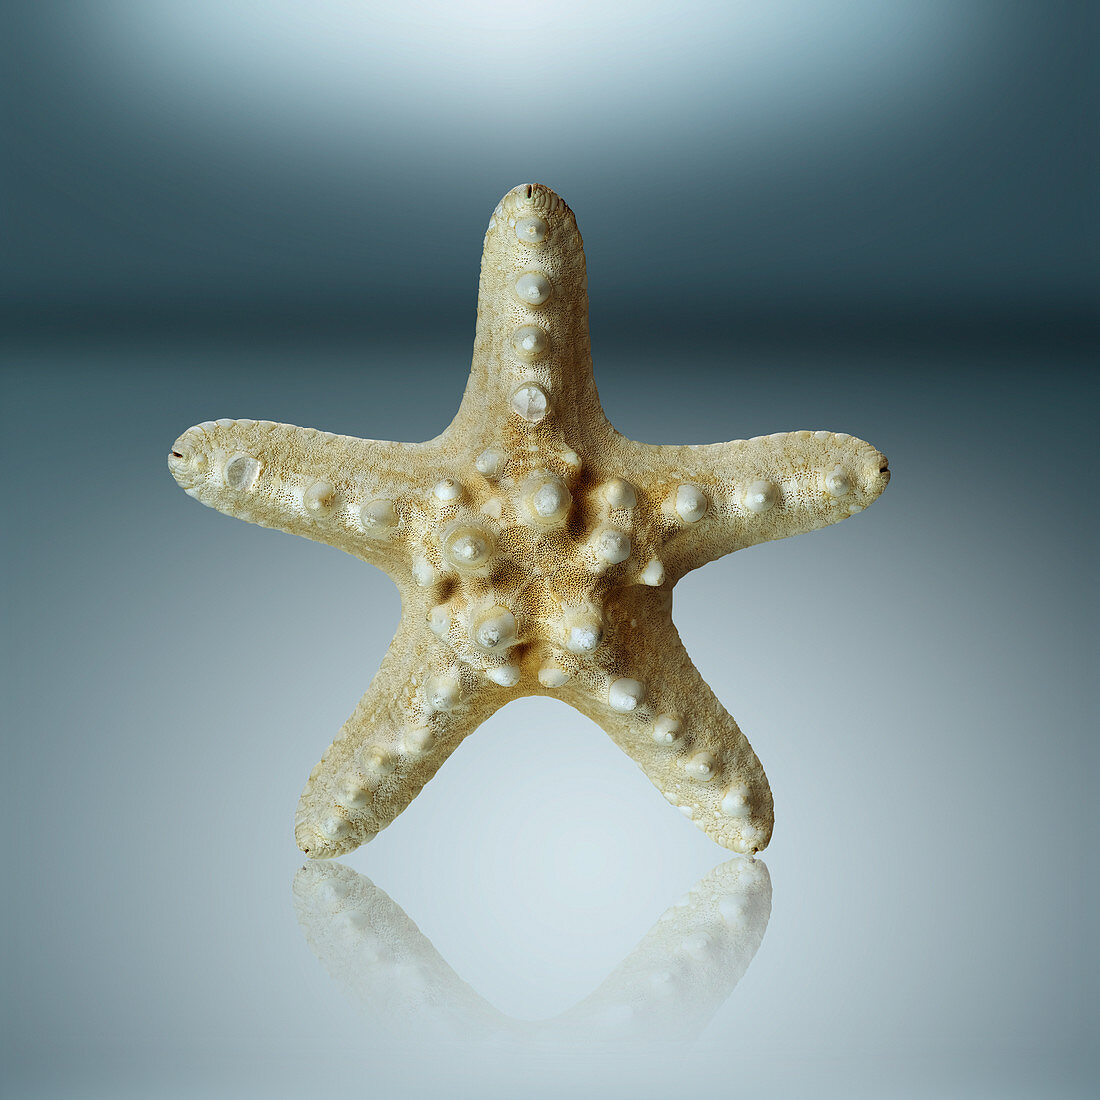 Preserved star fish